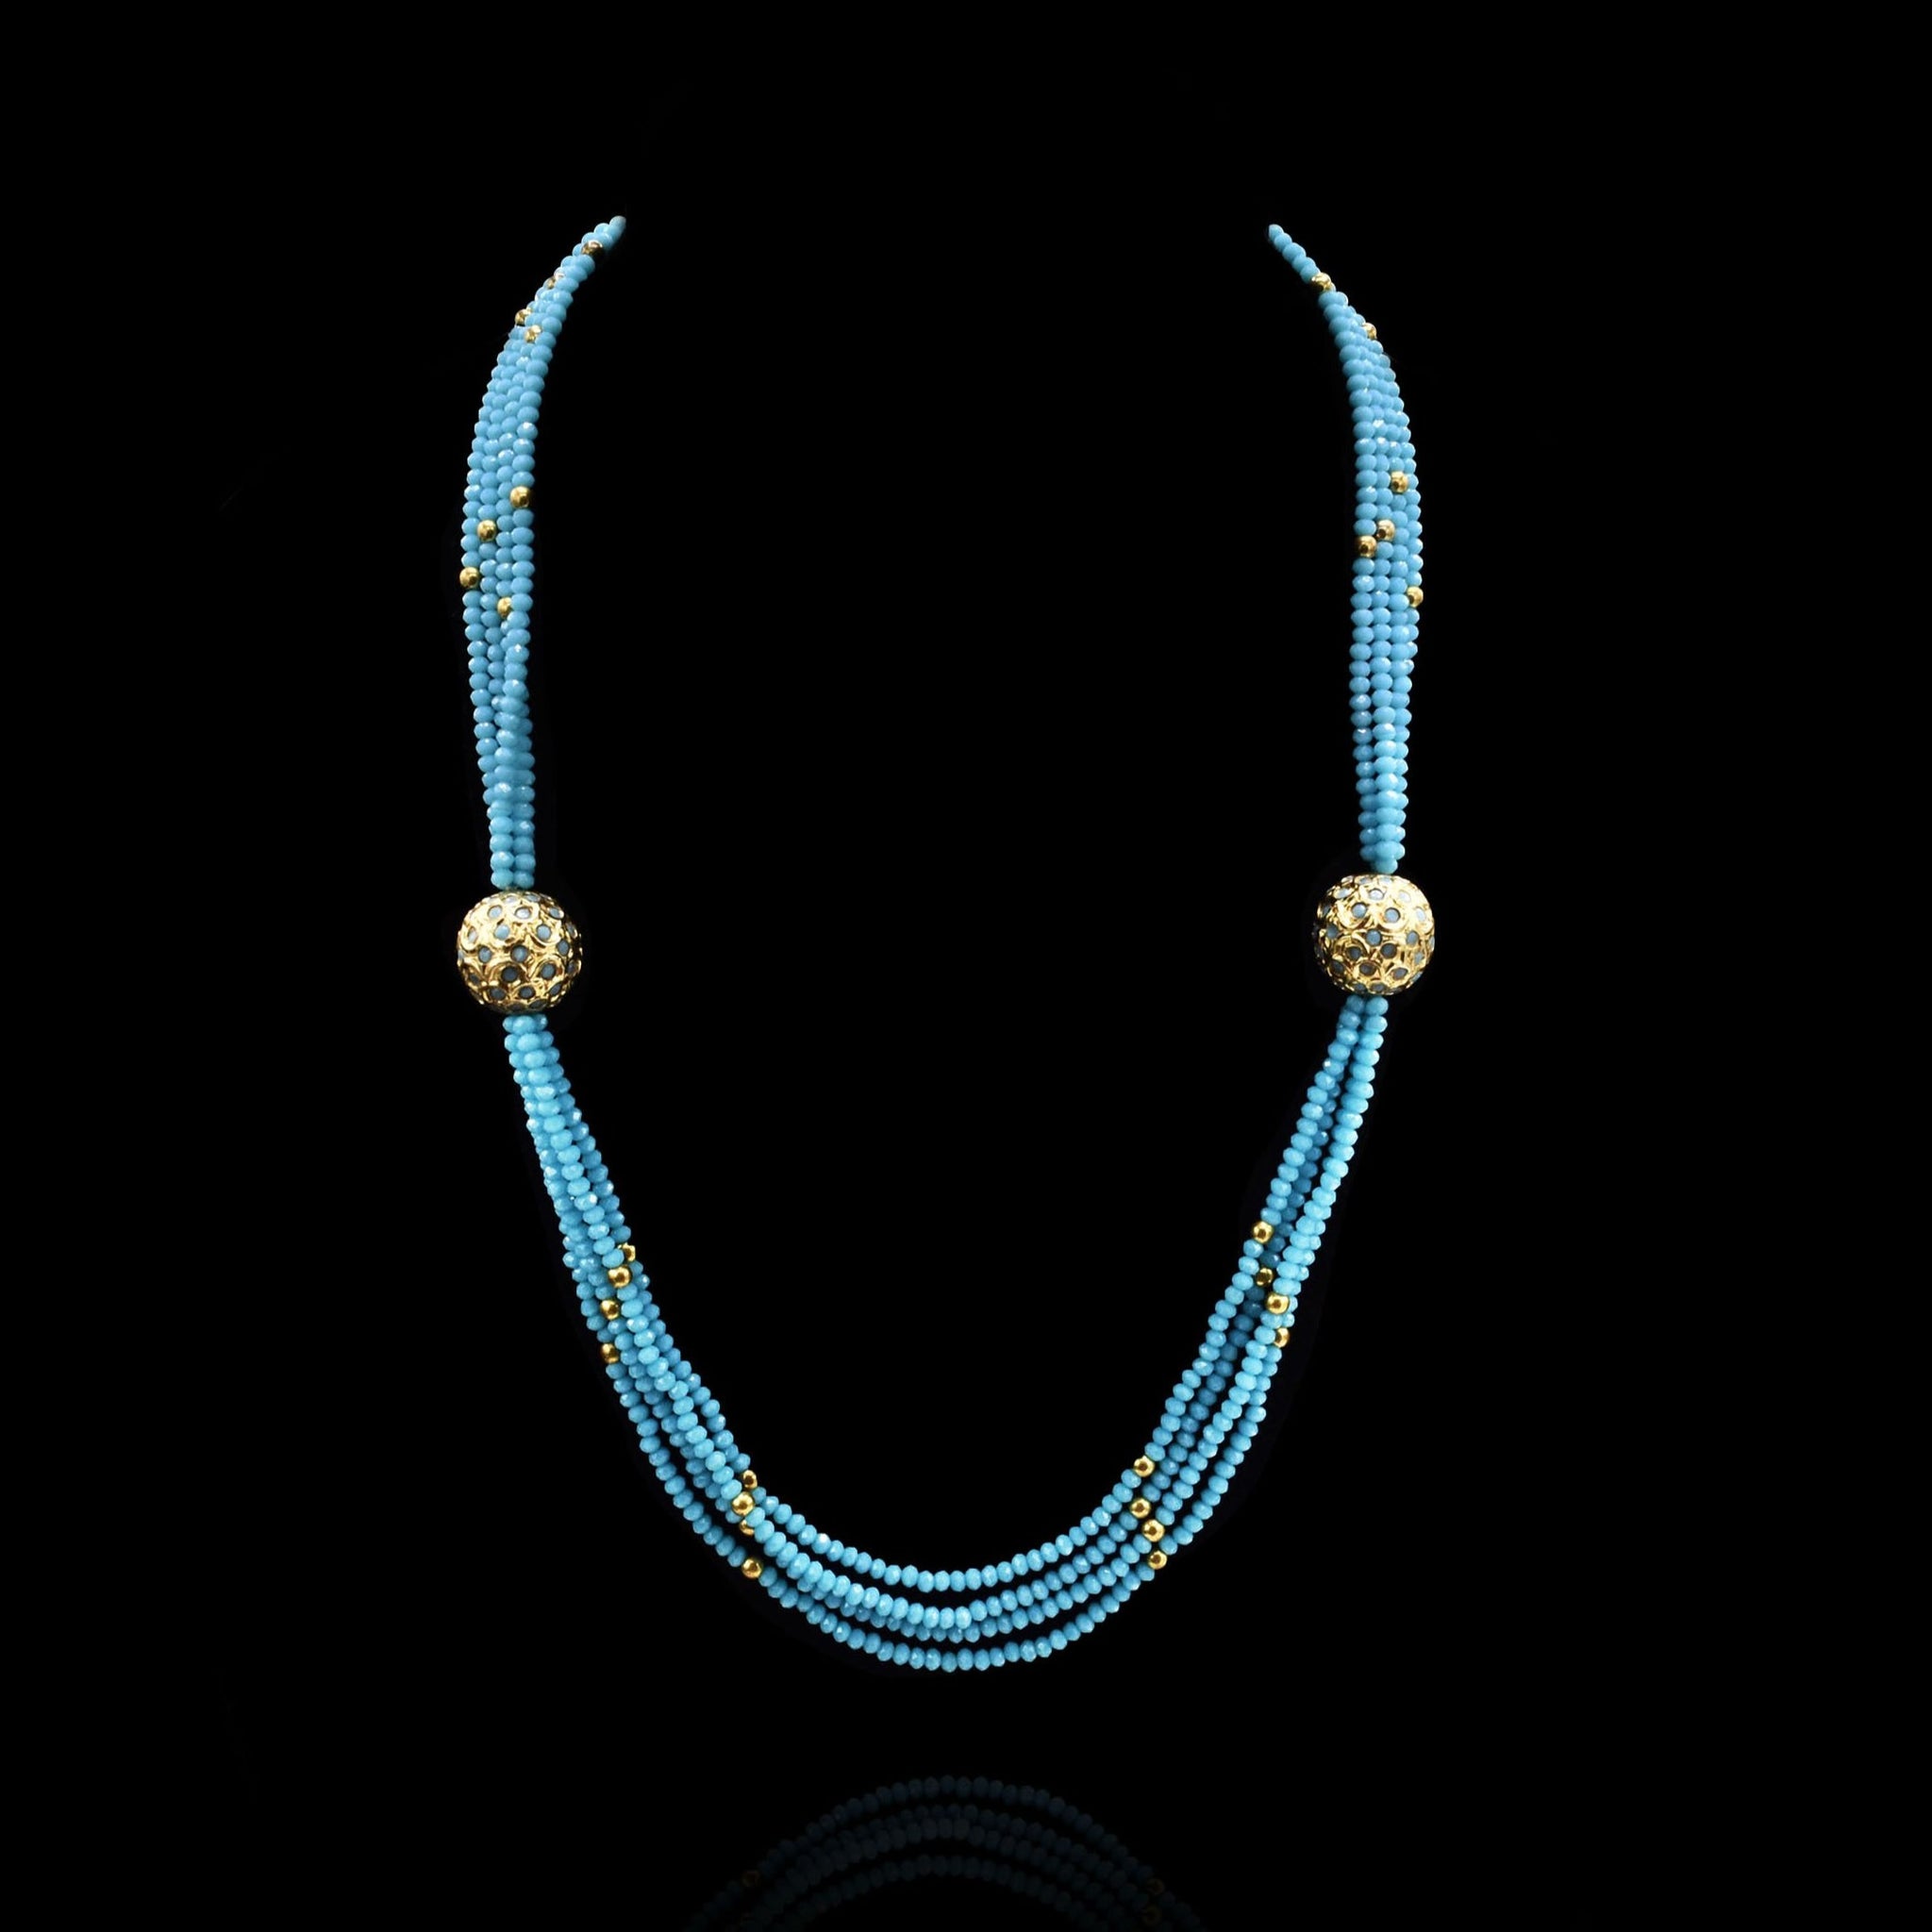 Danica Encrusted Golden Balls Necklace - The Pashm